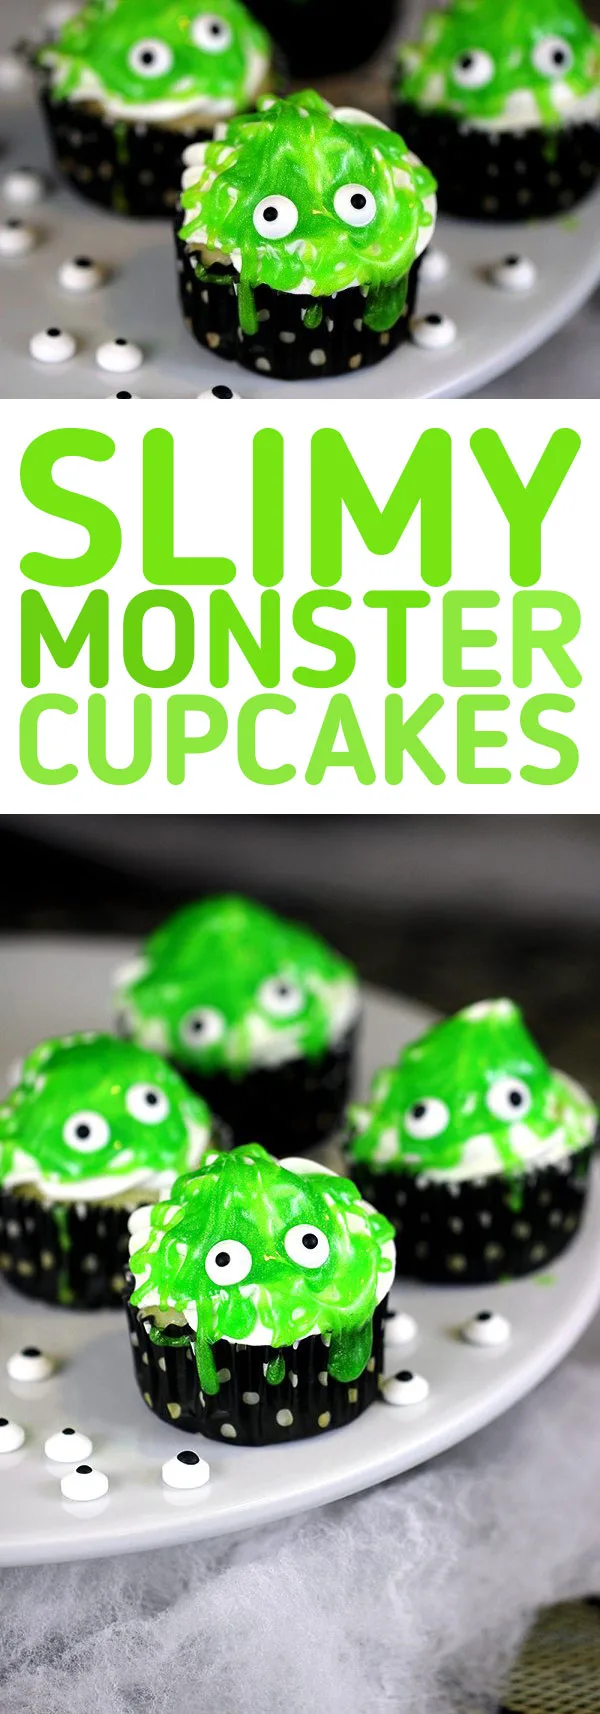 slimy monster cupcakes